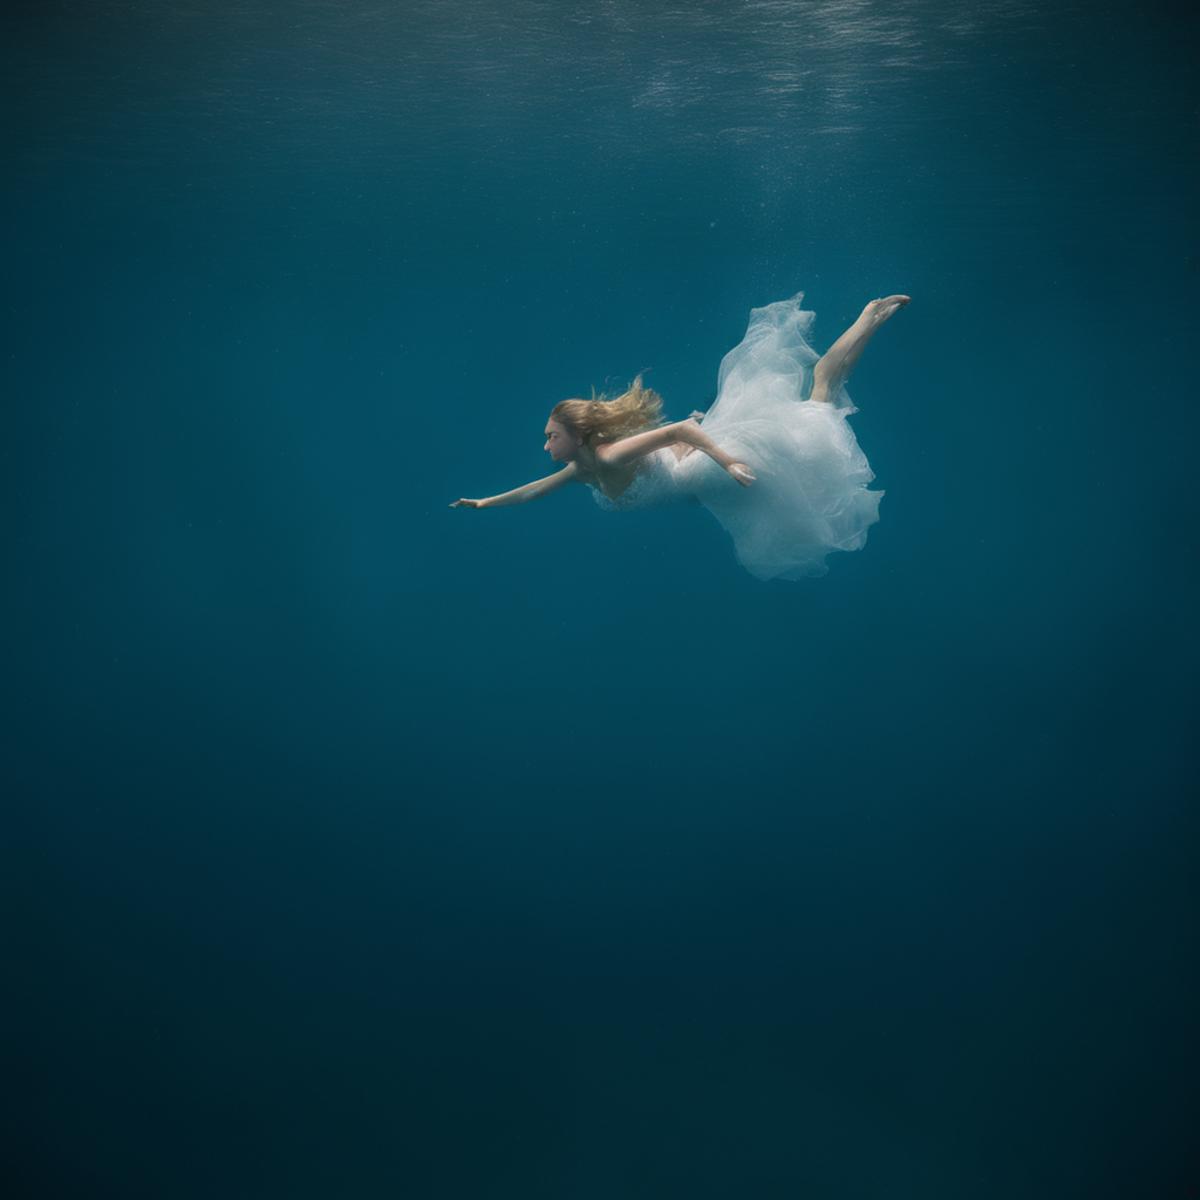 Underwater image by Sa_May